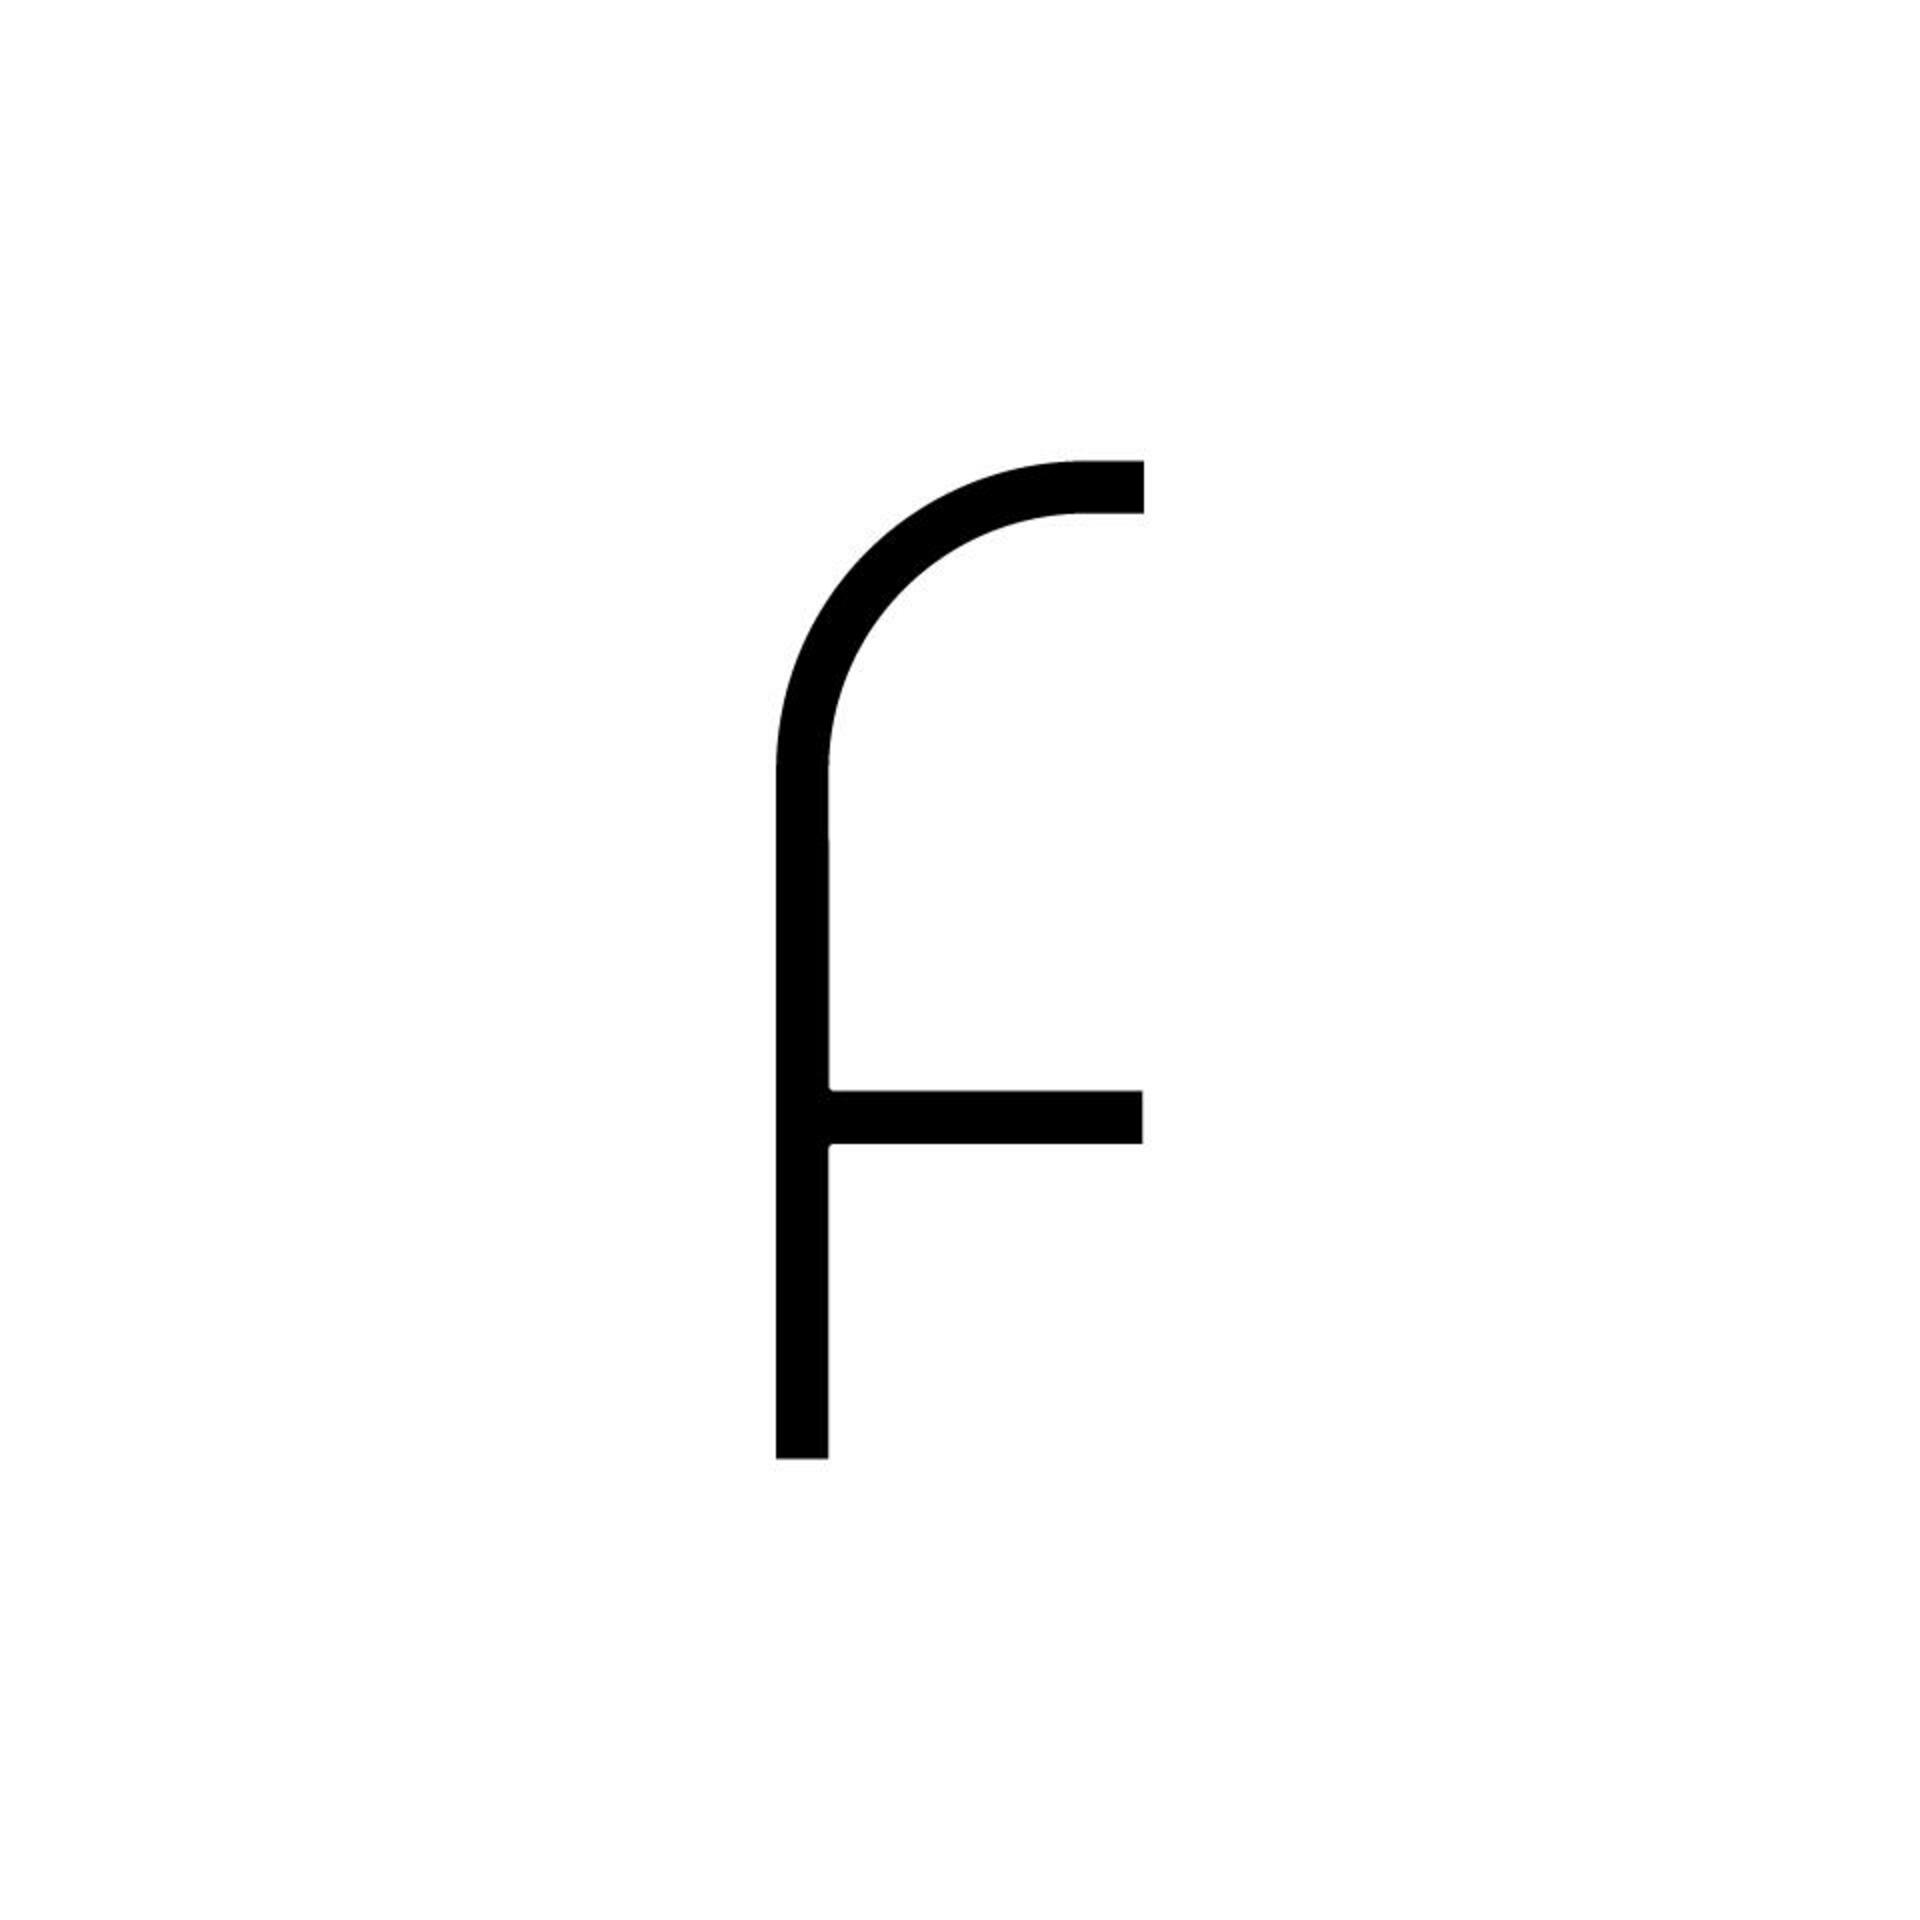 Artemide Alphabet of Light - malé písmeno f 1202f00A